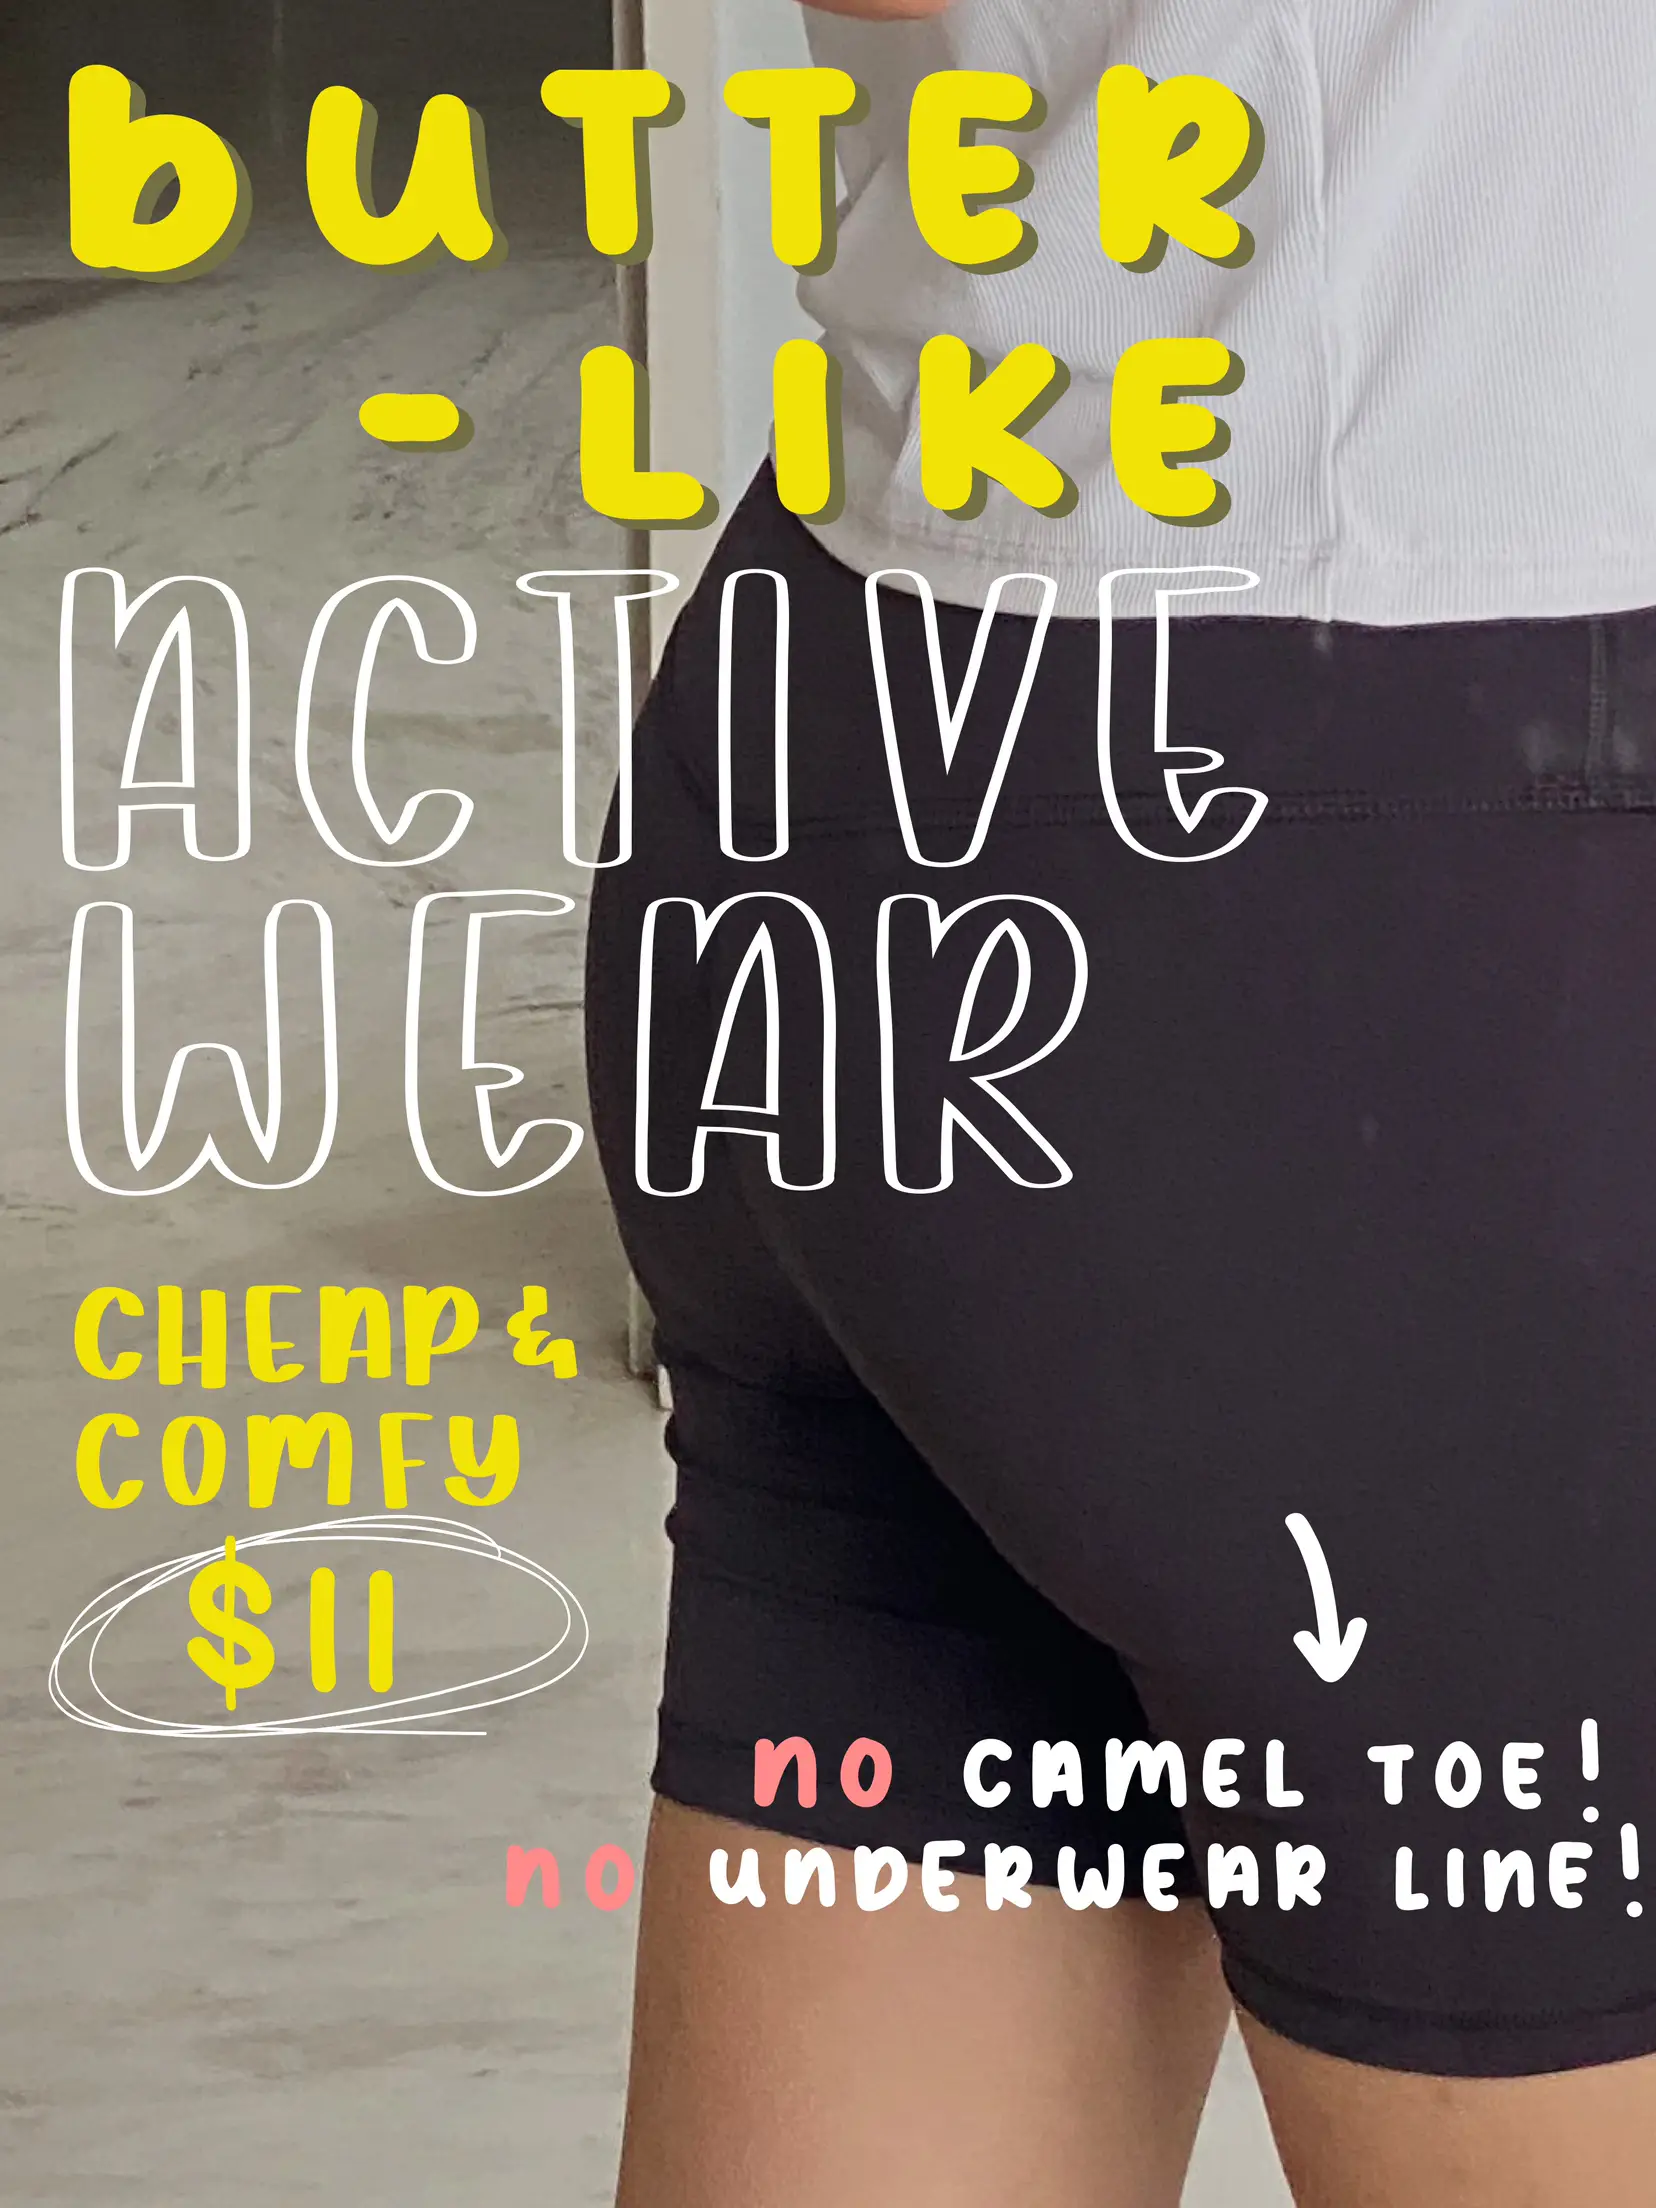 Total Tight Jeans on X: Mmmmmm😋😋😋 shorts cameltoe !!!!!! https